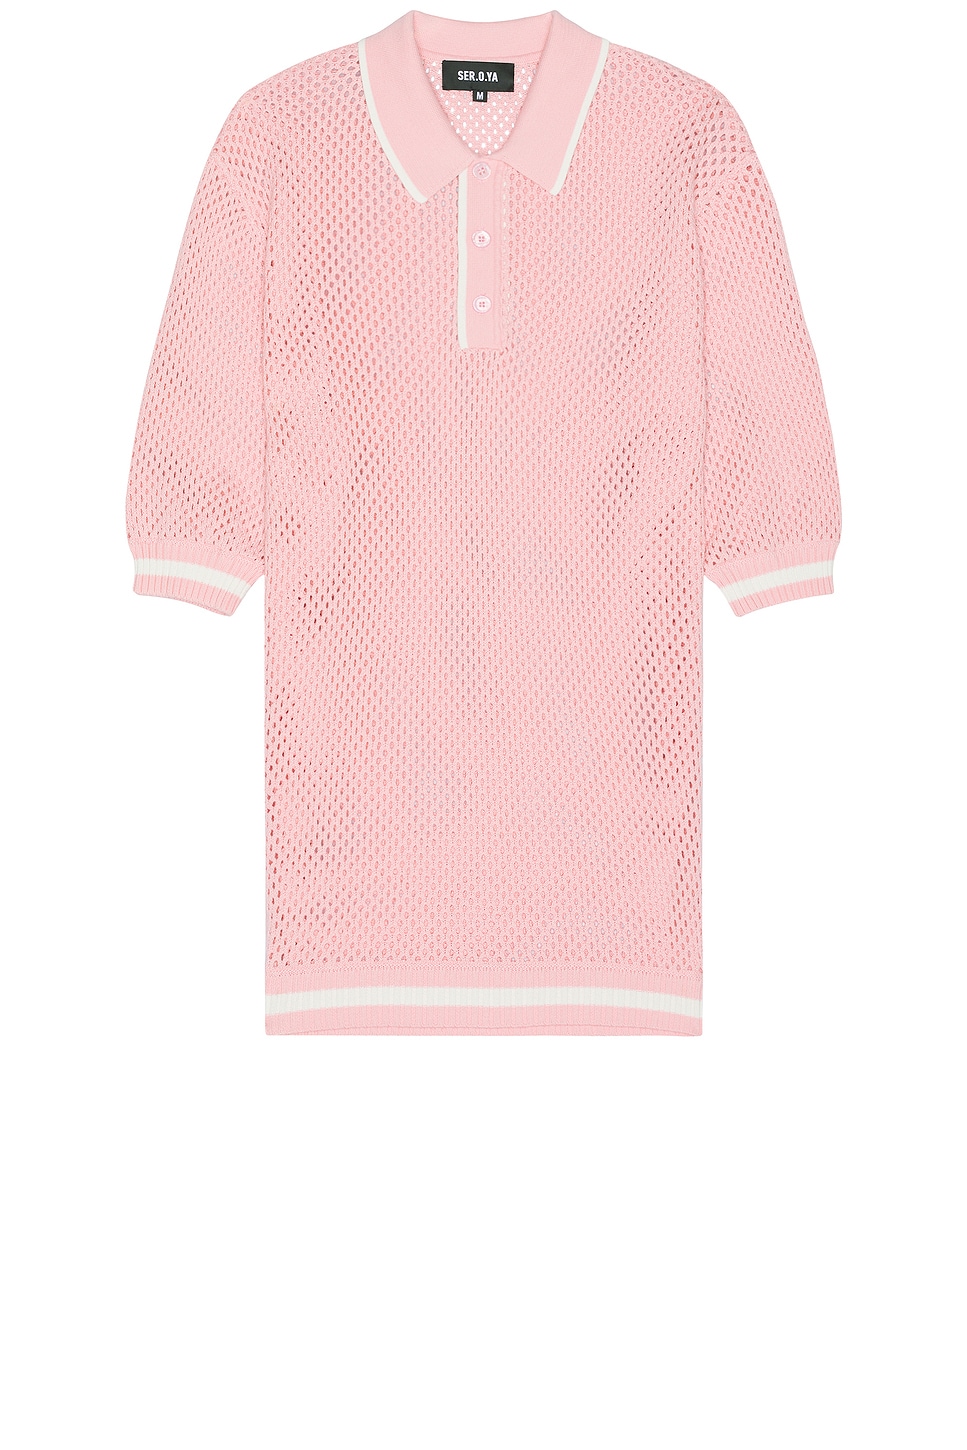 Image 1 of SER.O.YA Zane Crochet Polo in Pink & White